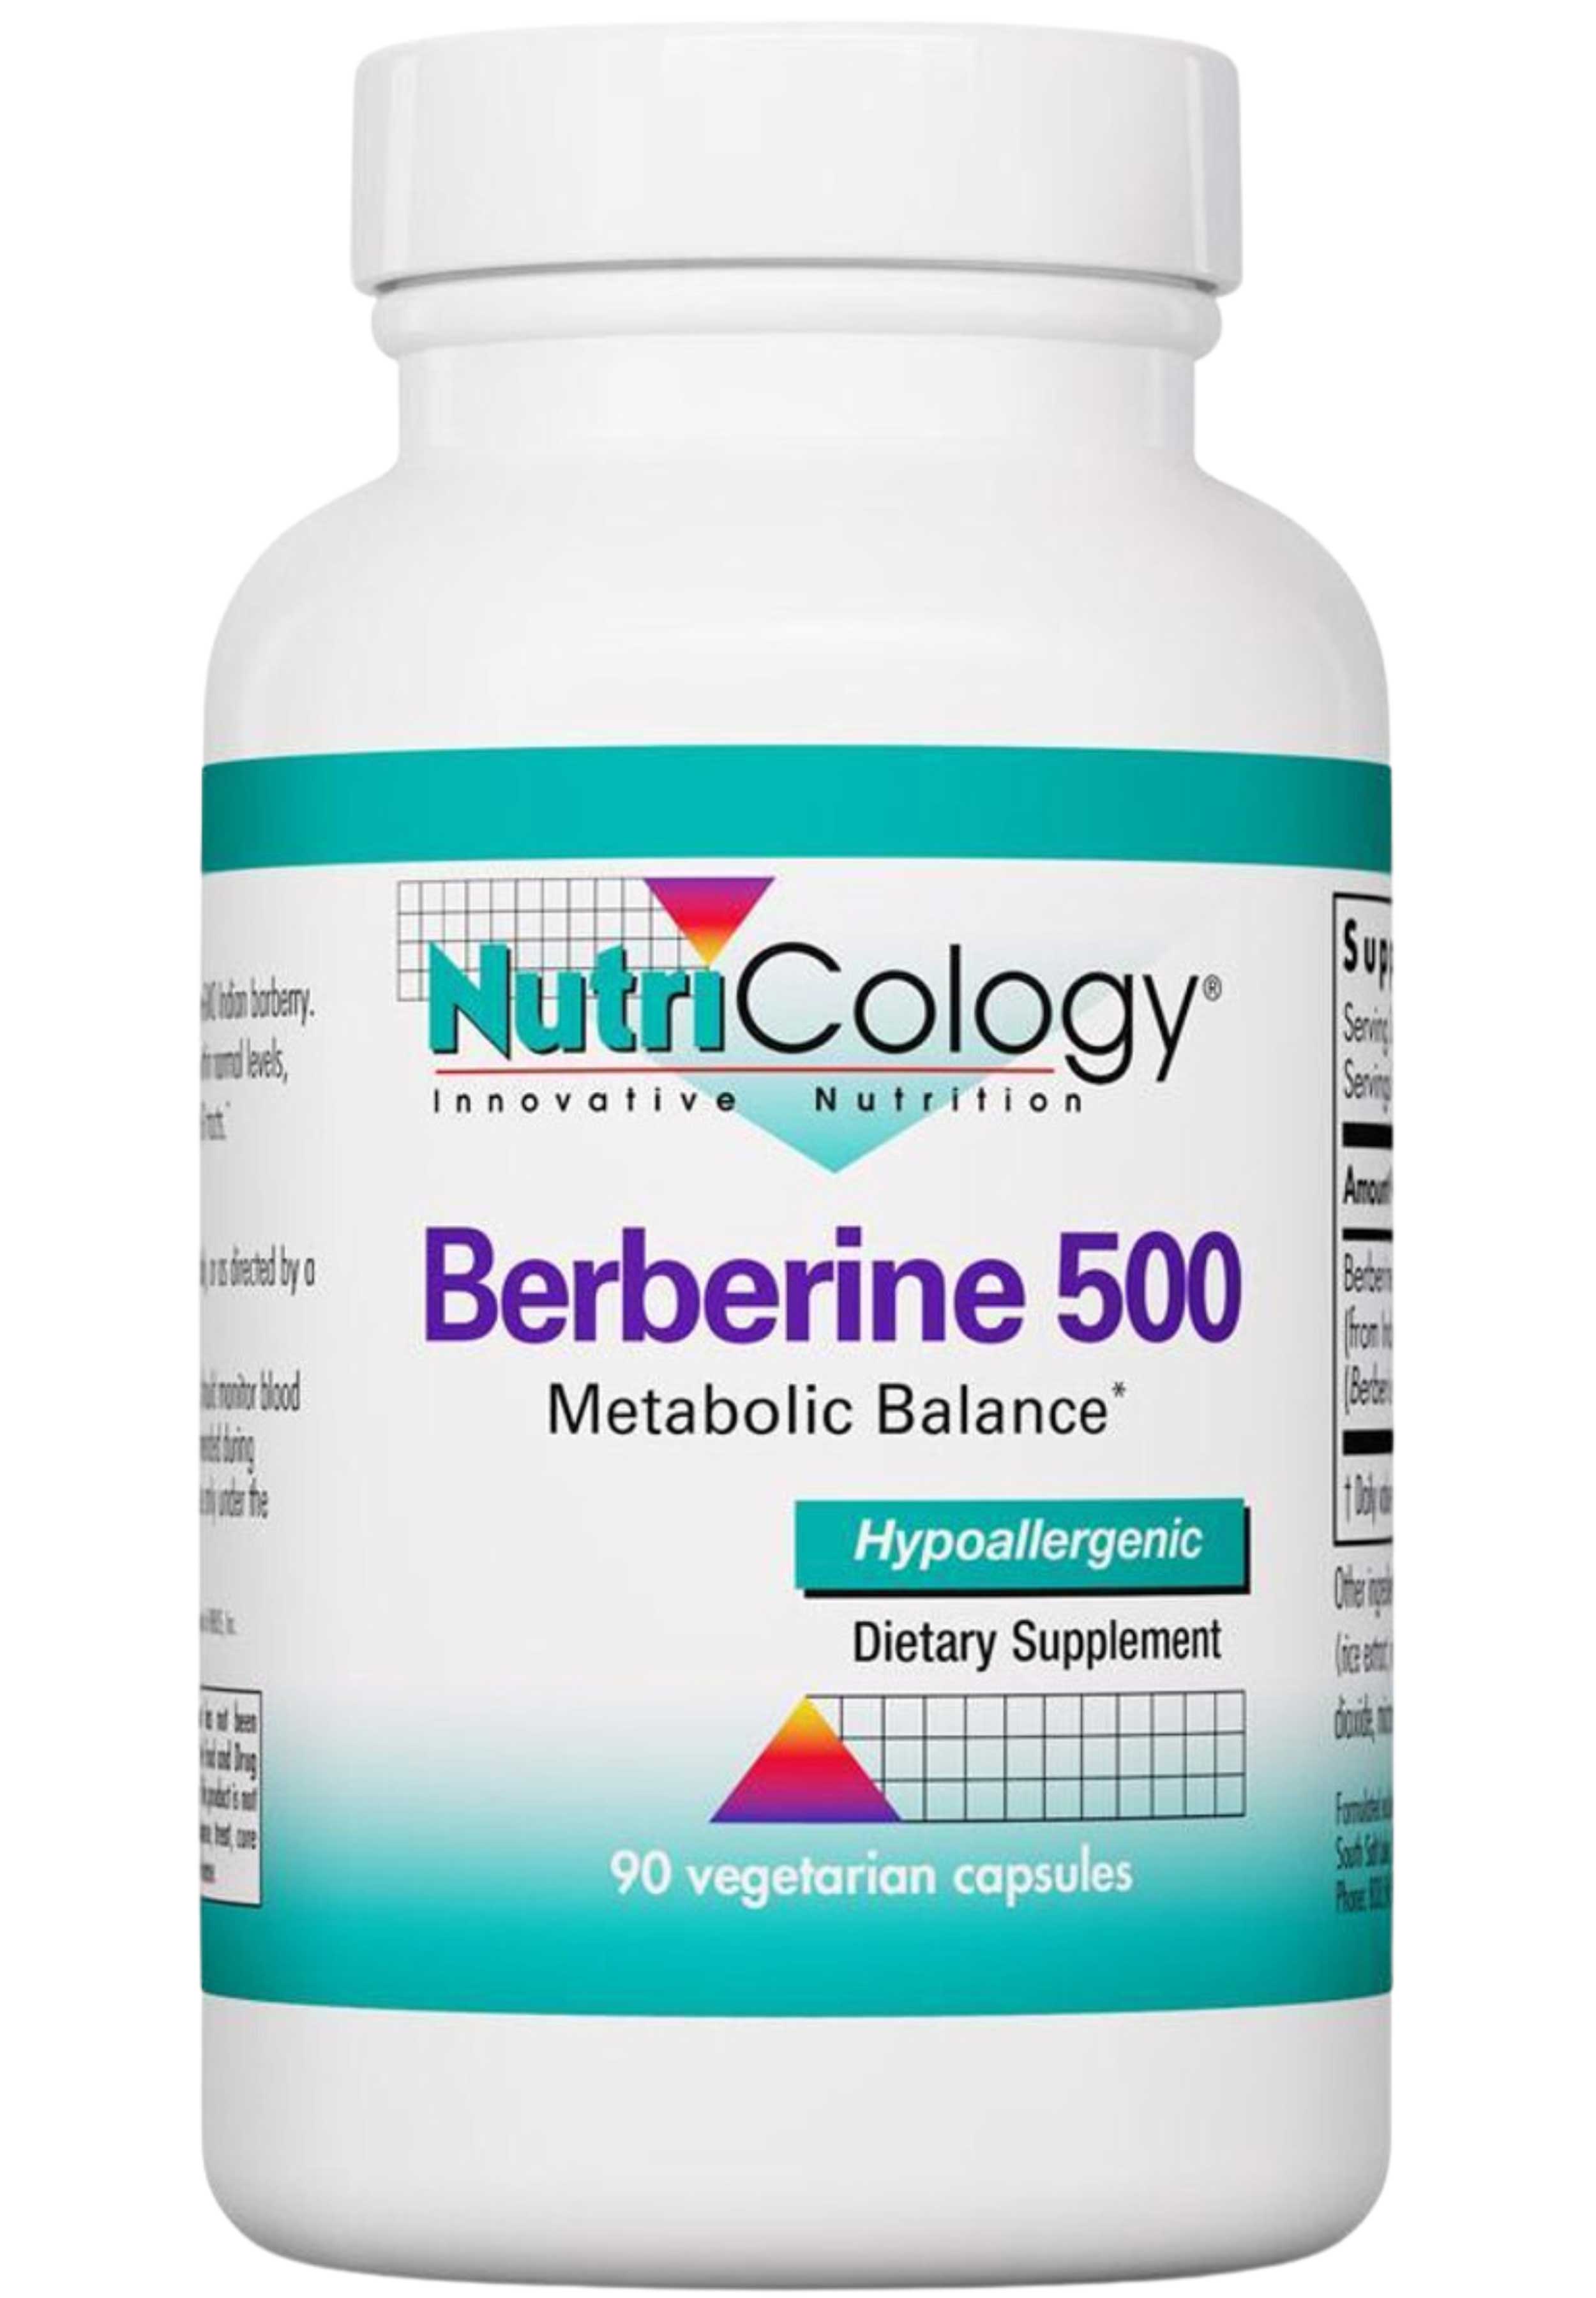 Nutricology Berberine 500